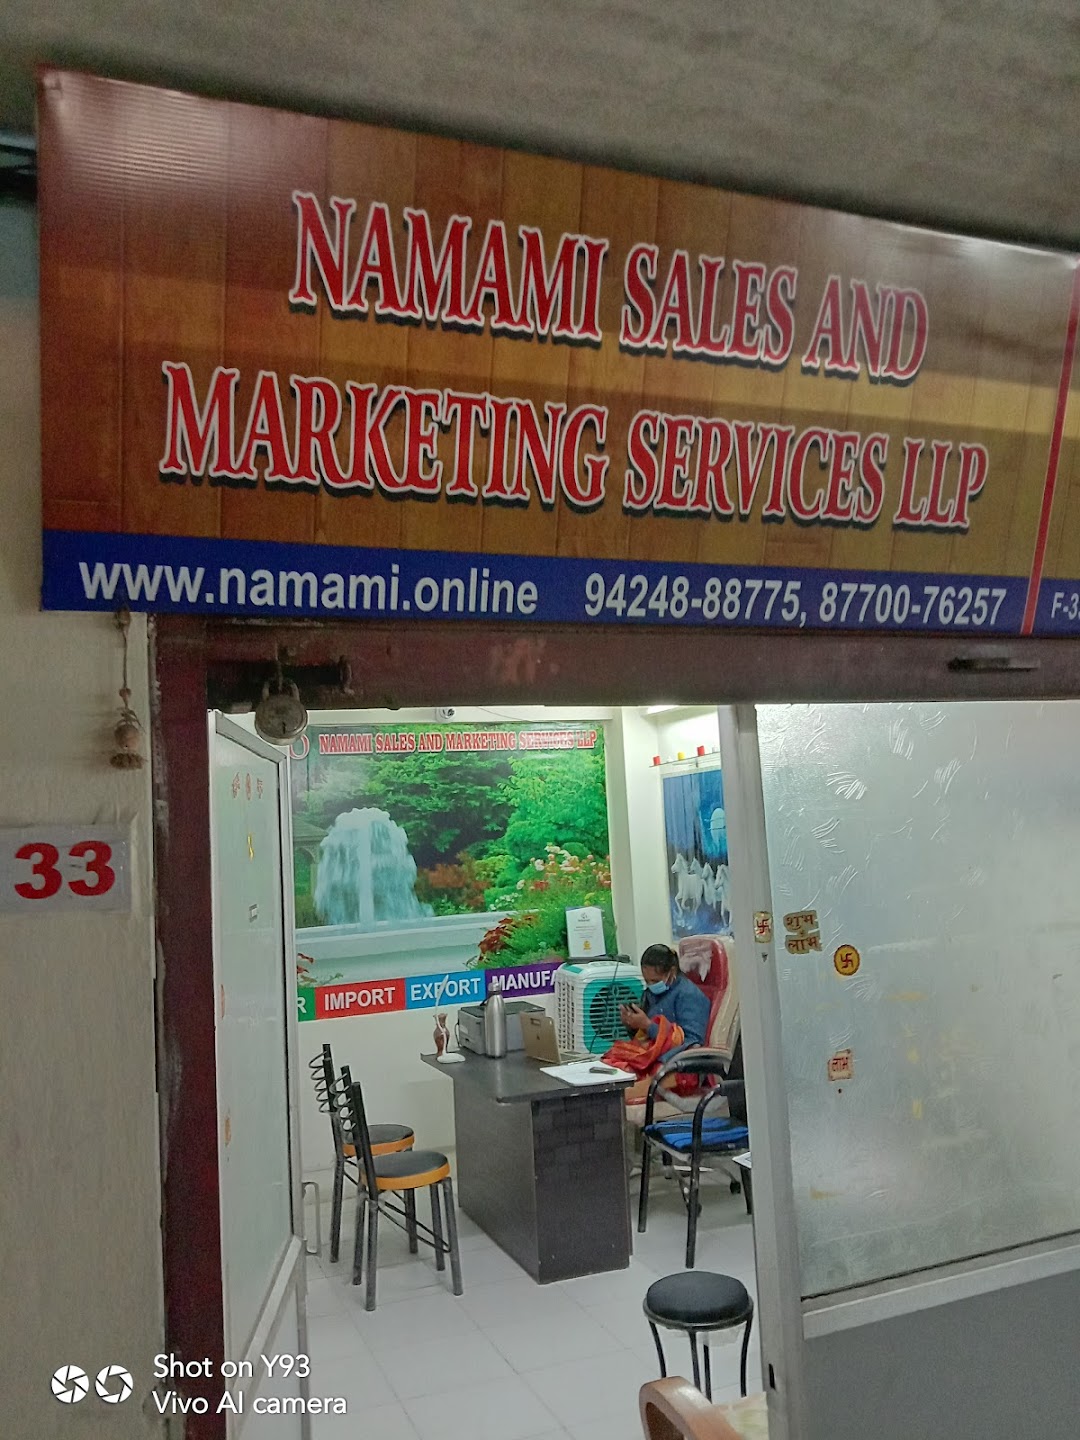 Namami sales and marketing services llp